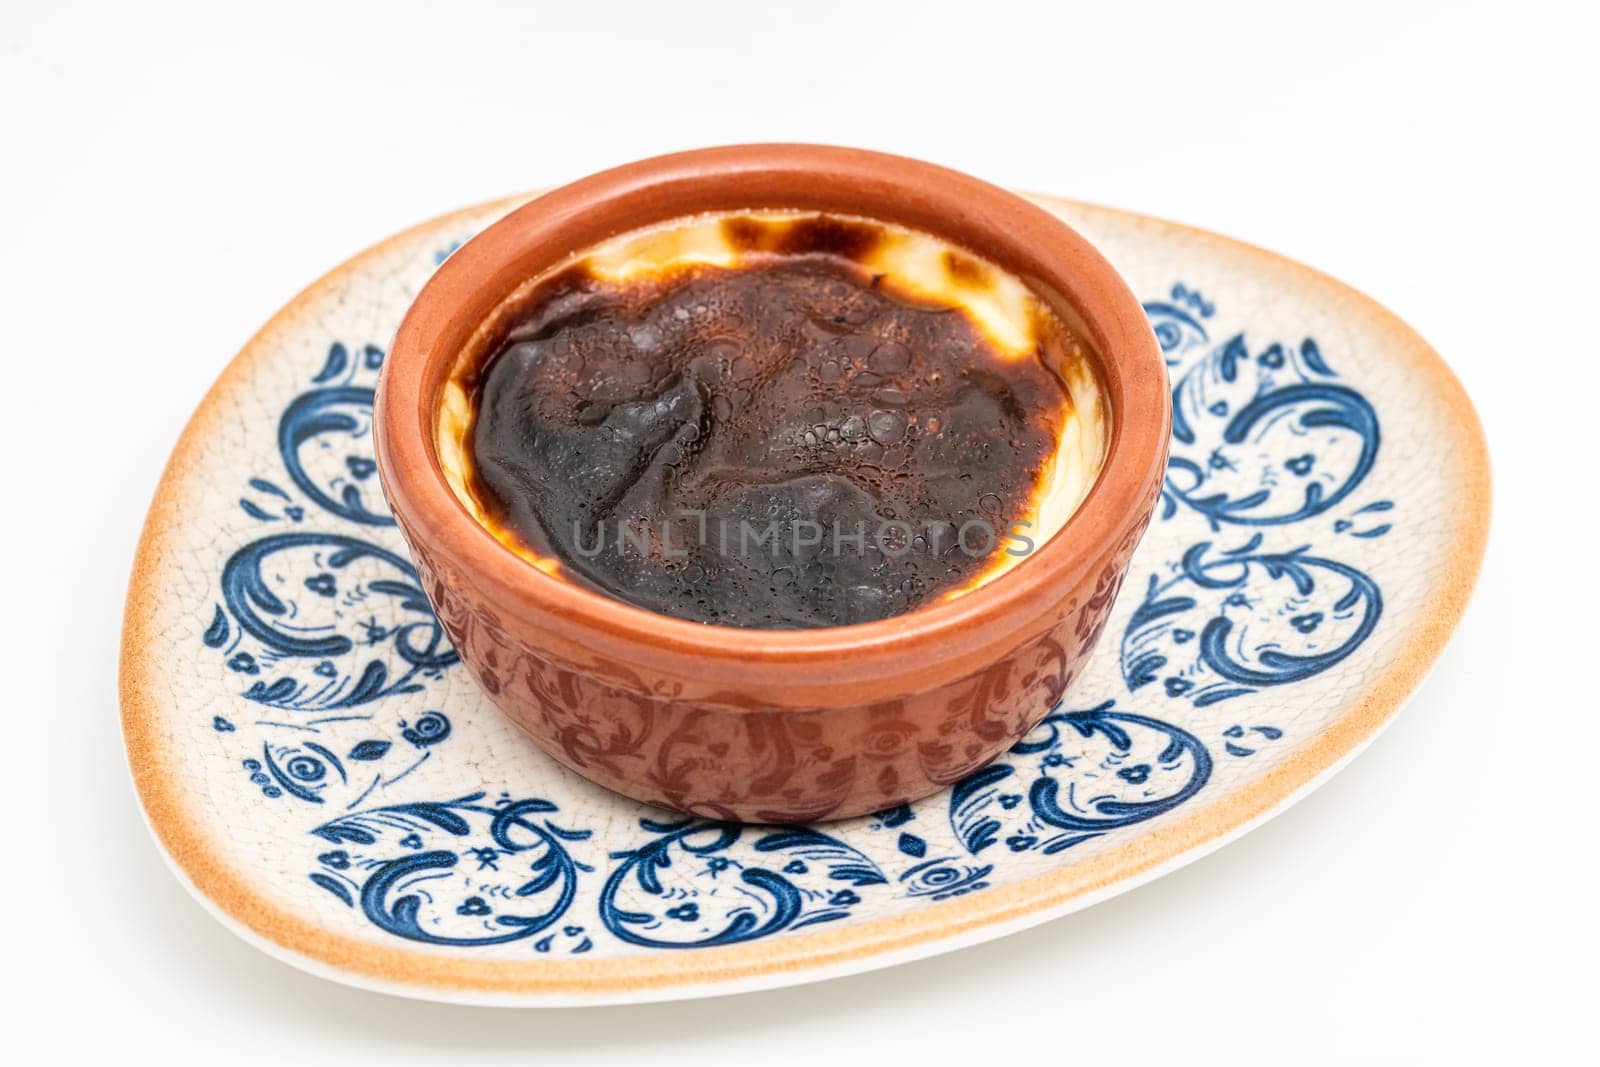 Traditional turkish dessert bakery rice pudding Turkish name Firin Sutlac in ceramic bowl by Sonat